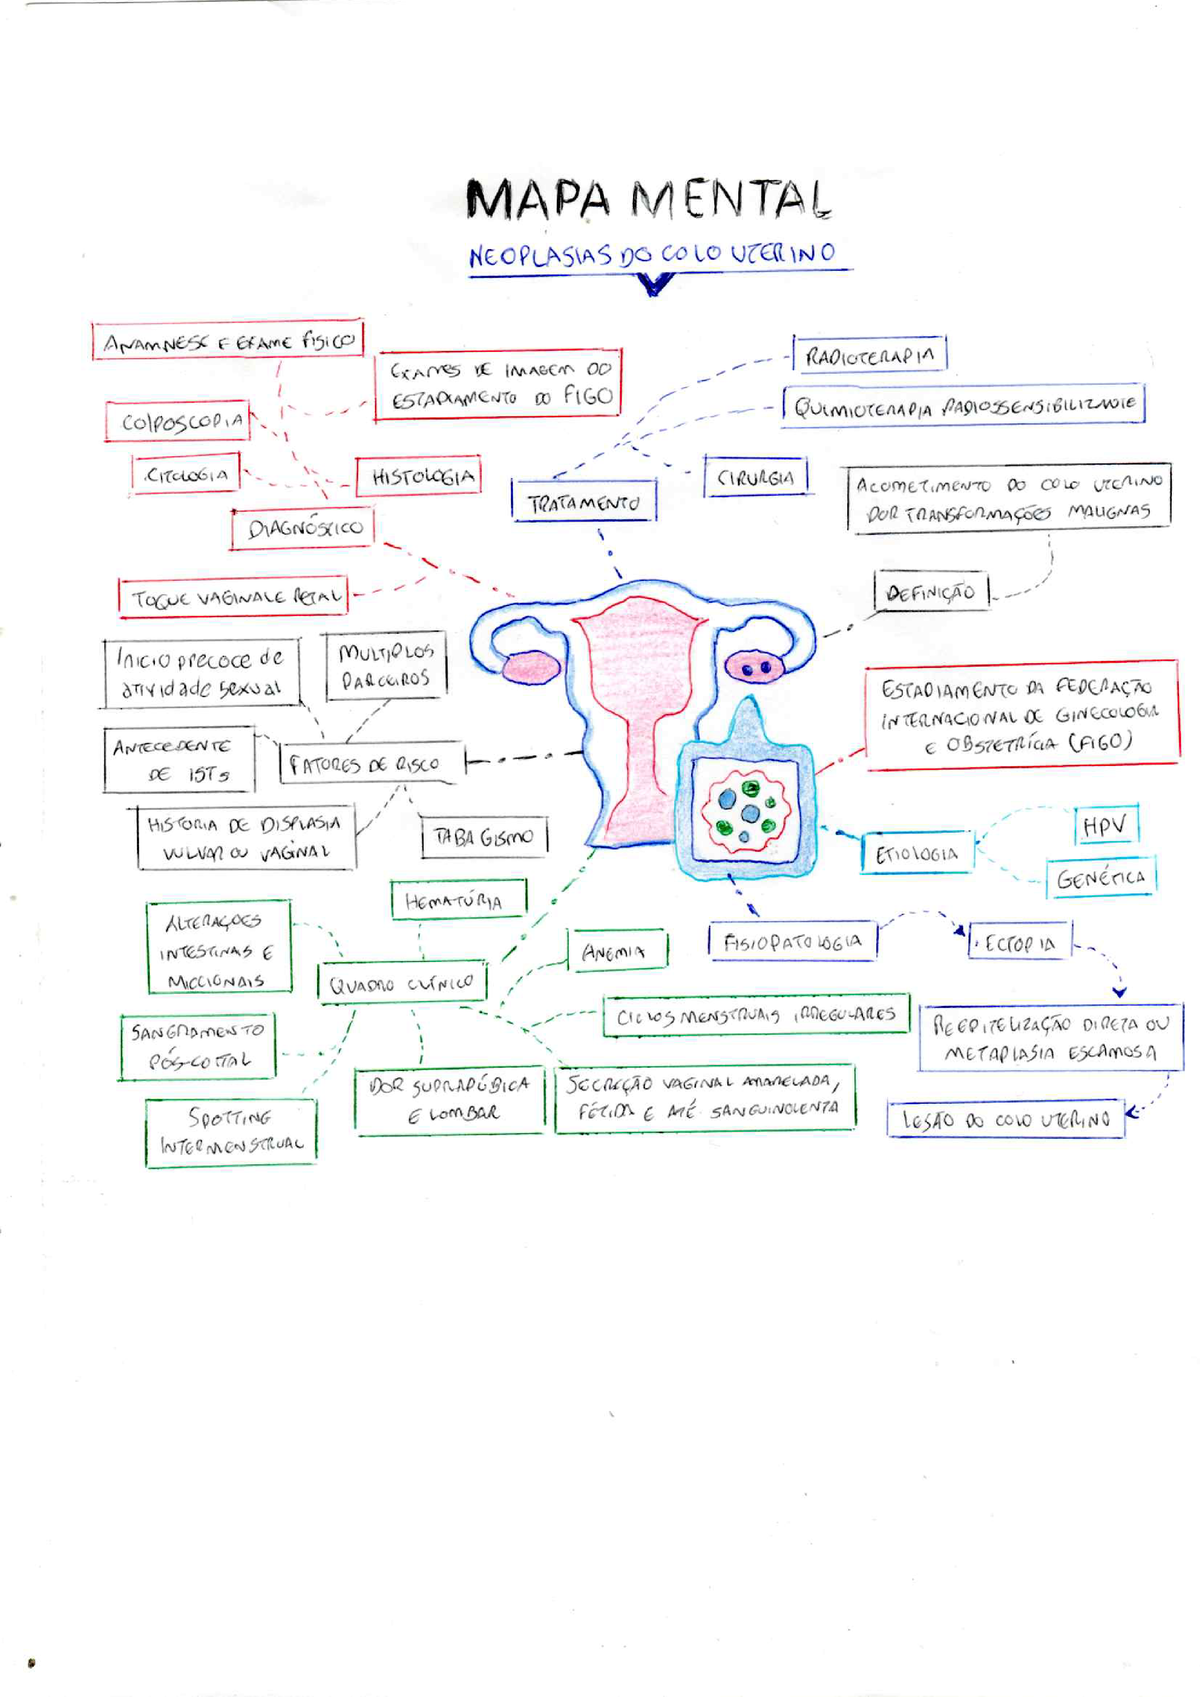 Cancer Cuello uterino - Mapa mental - Patología - USS - Studocu